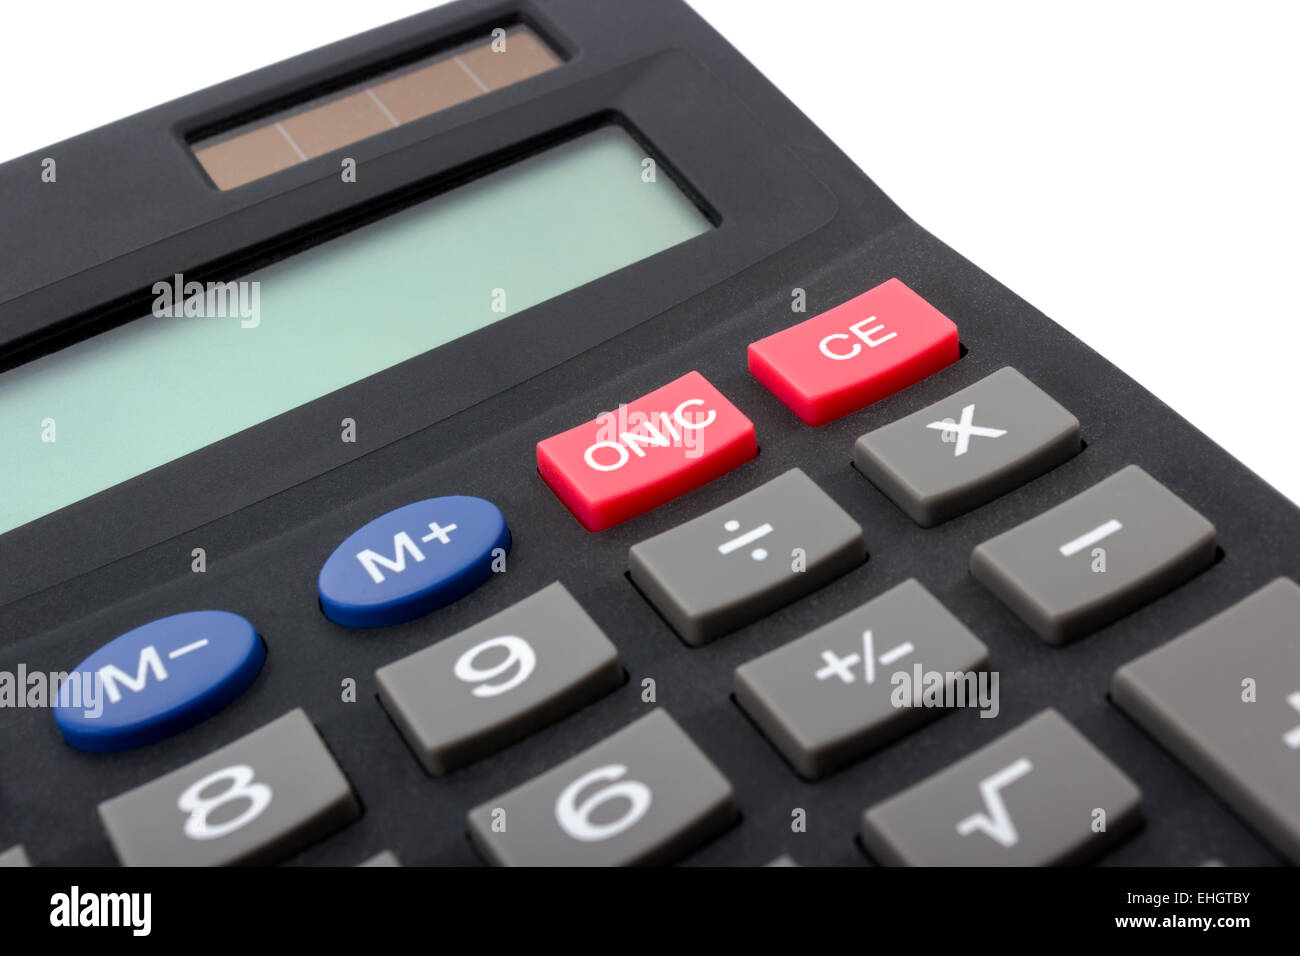 Digital electronic calculator Stock Photo